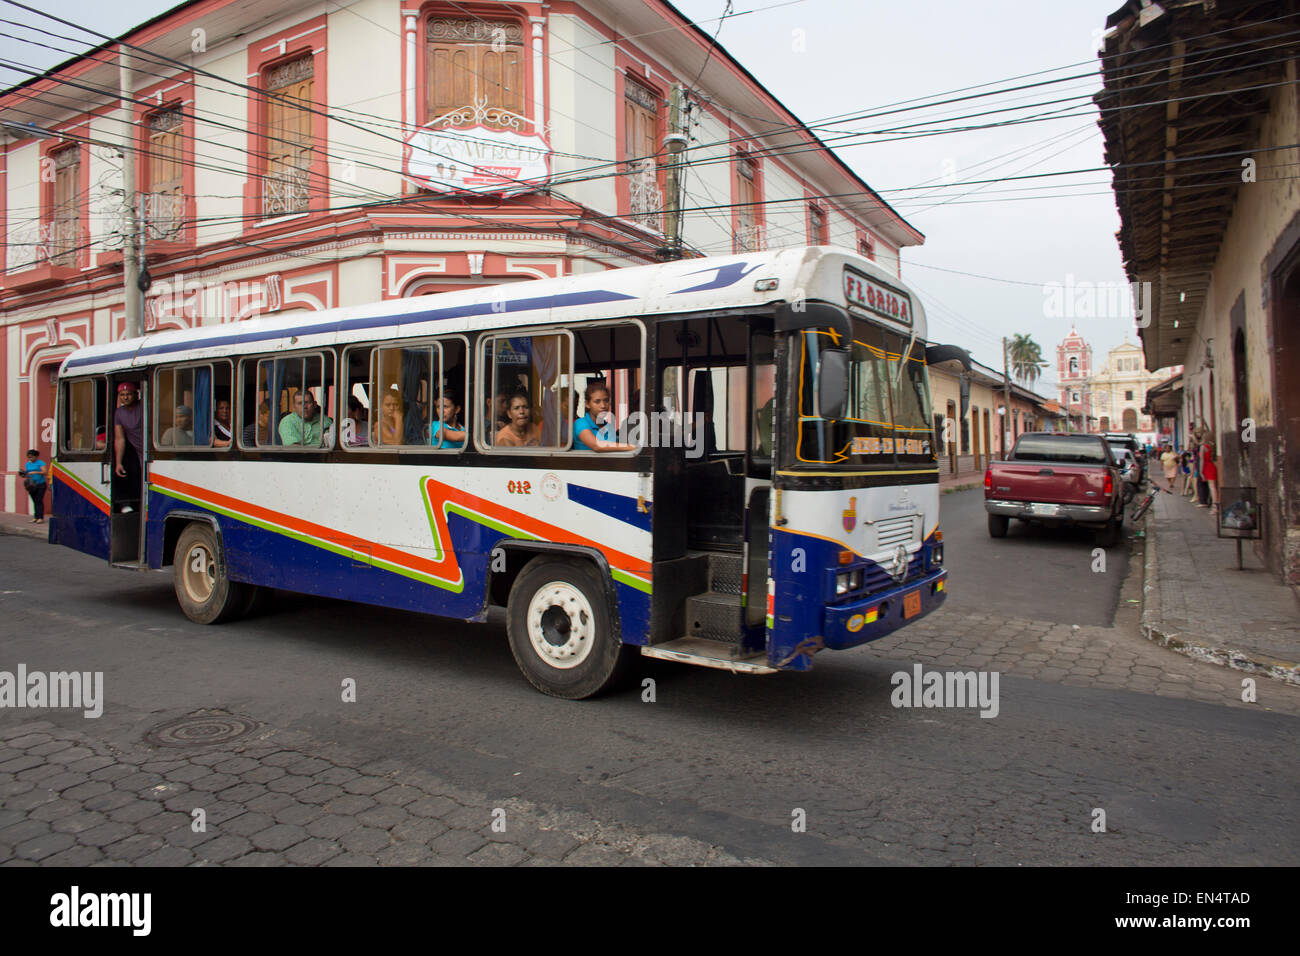 public transport in nicaragua Stock Photo